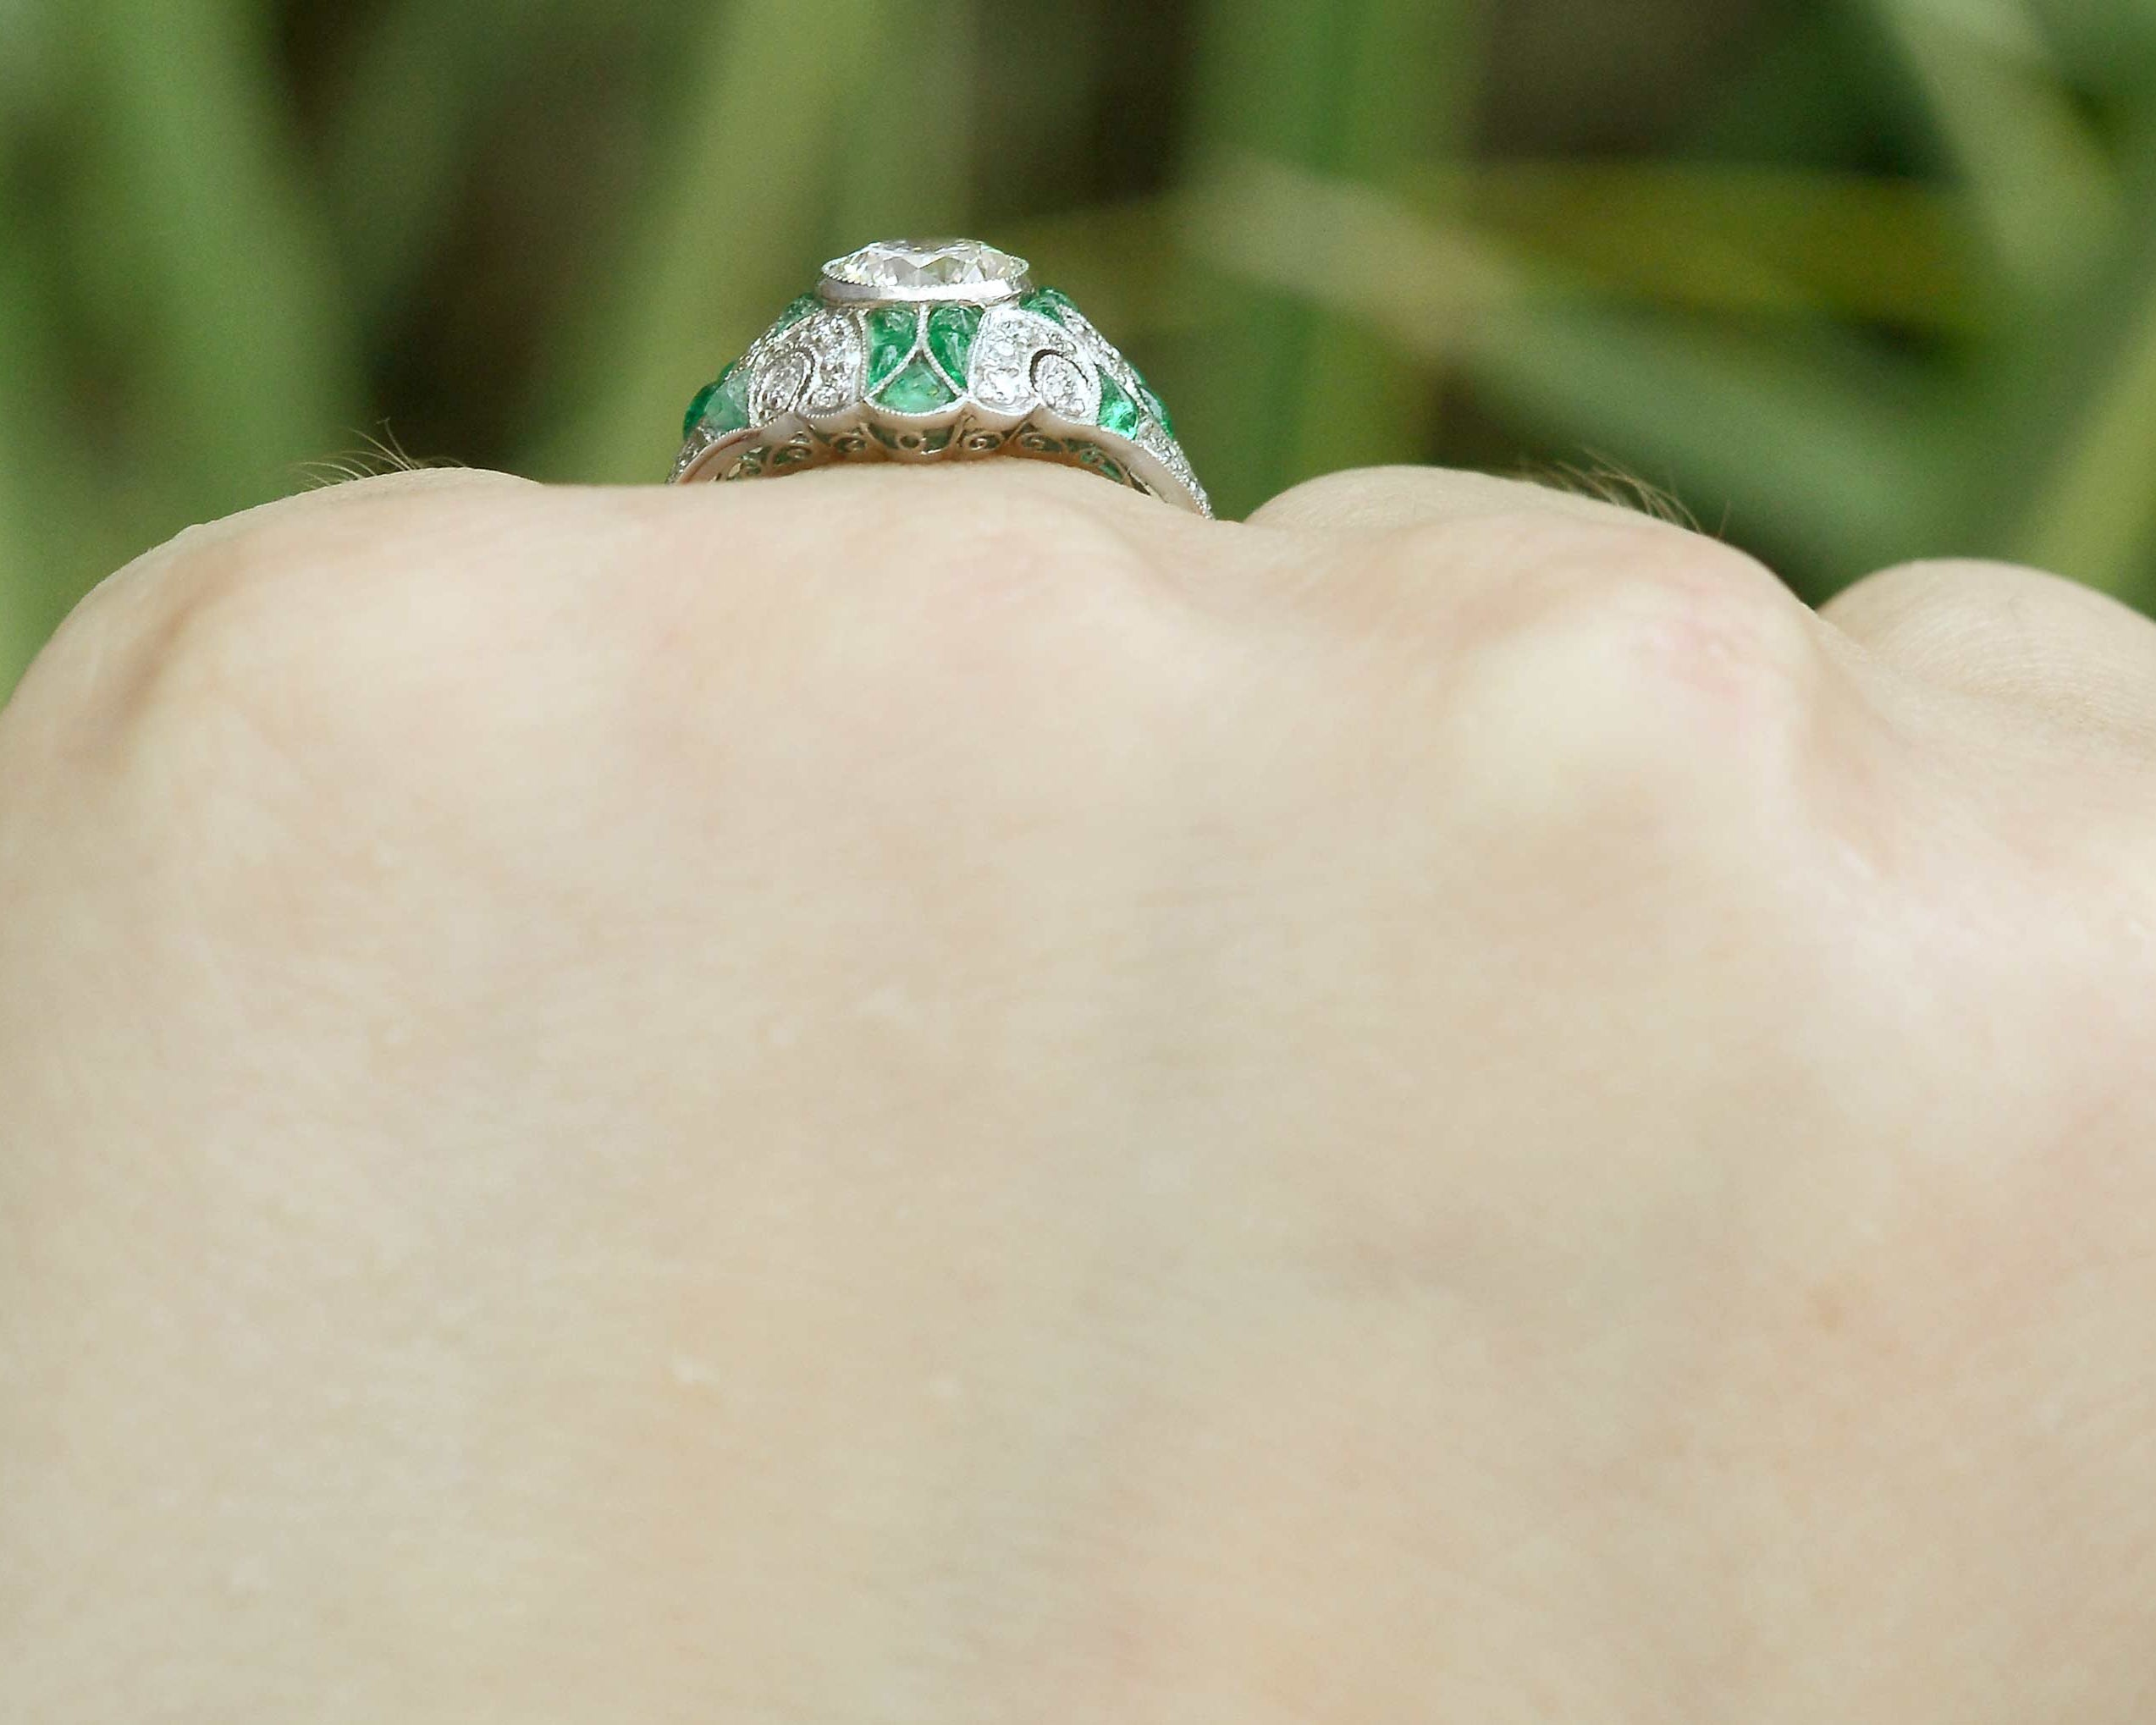 Cabochon cut emeralds line this diamond mosaic engagement ring.